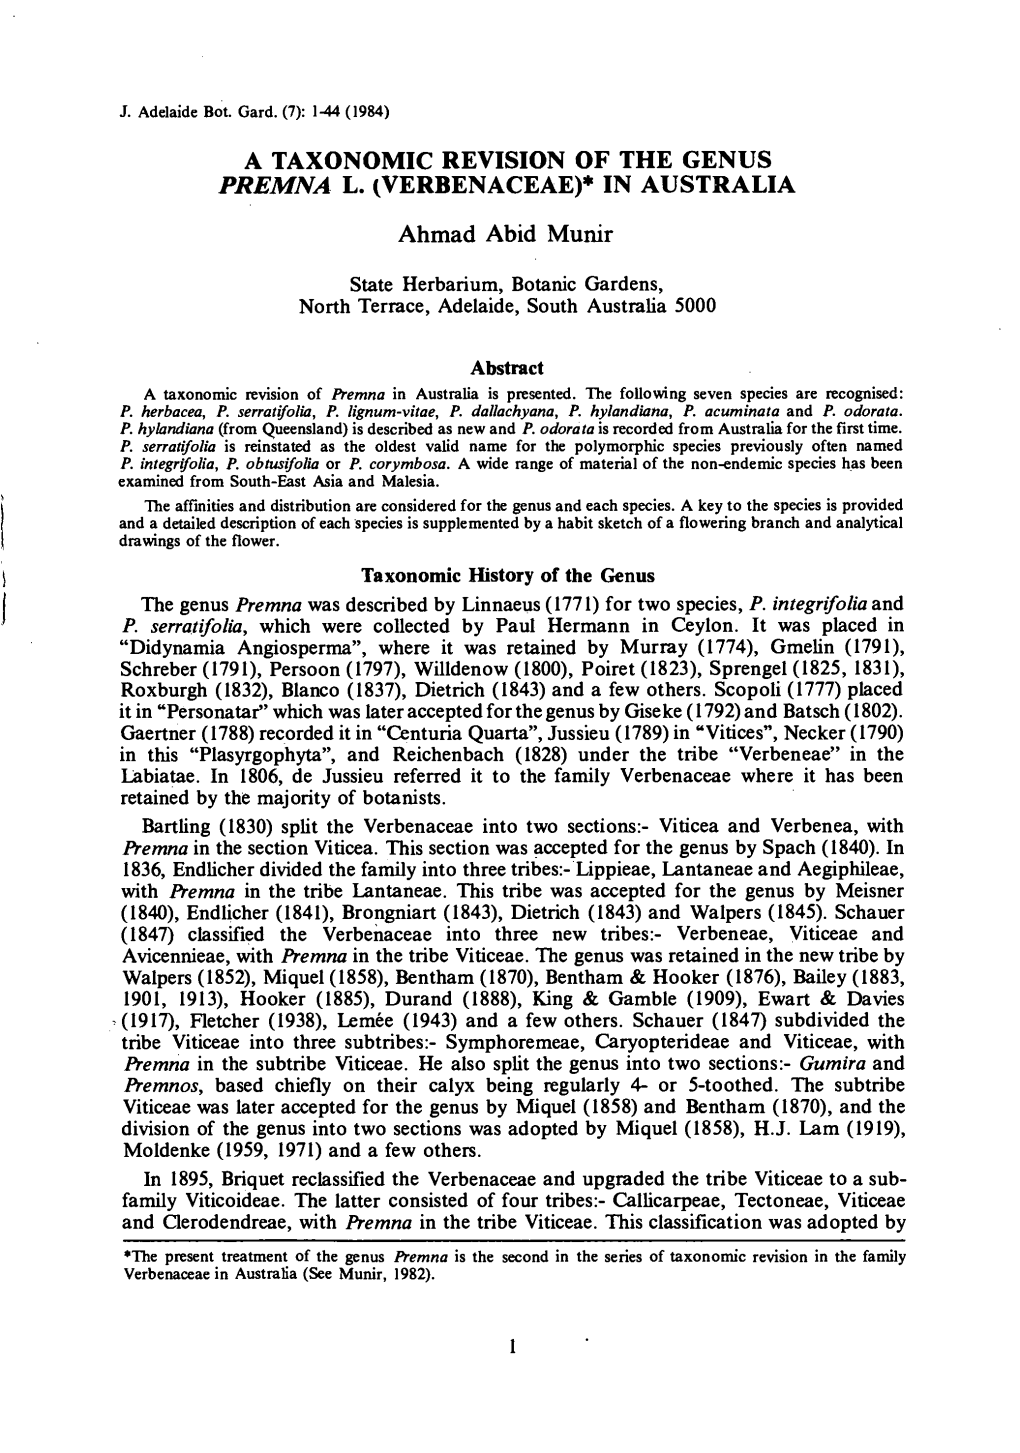 A TAXONOMIC REVISION of the GENUS PREMNA L. (VERBENACEAE)* in AUSTRALIA Ahmad Abid Munir